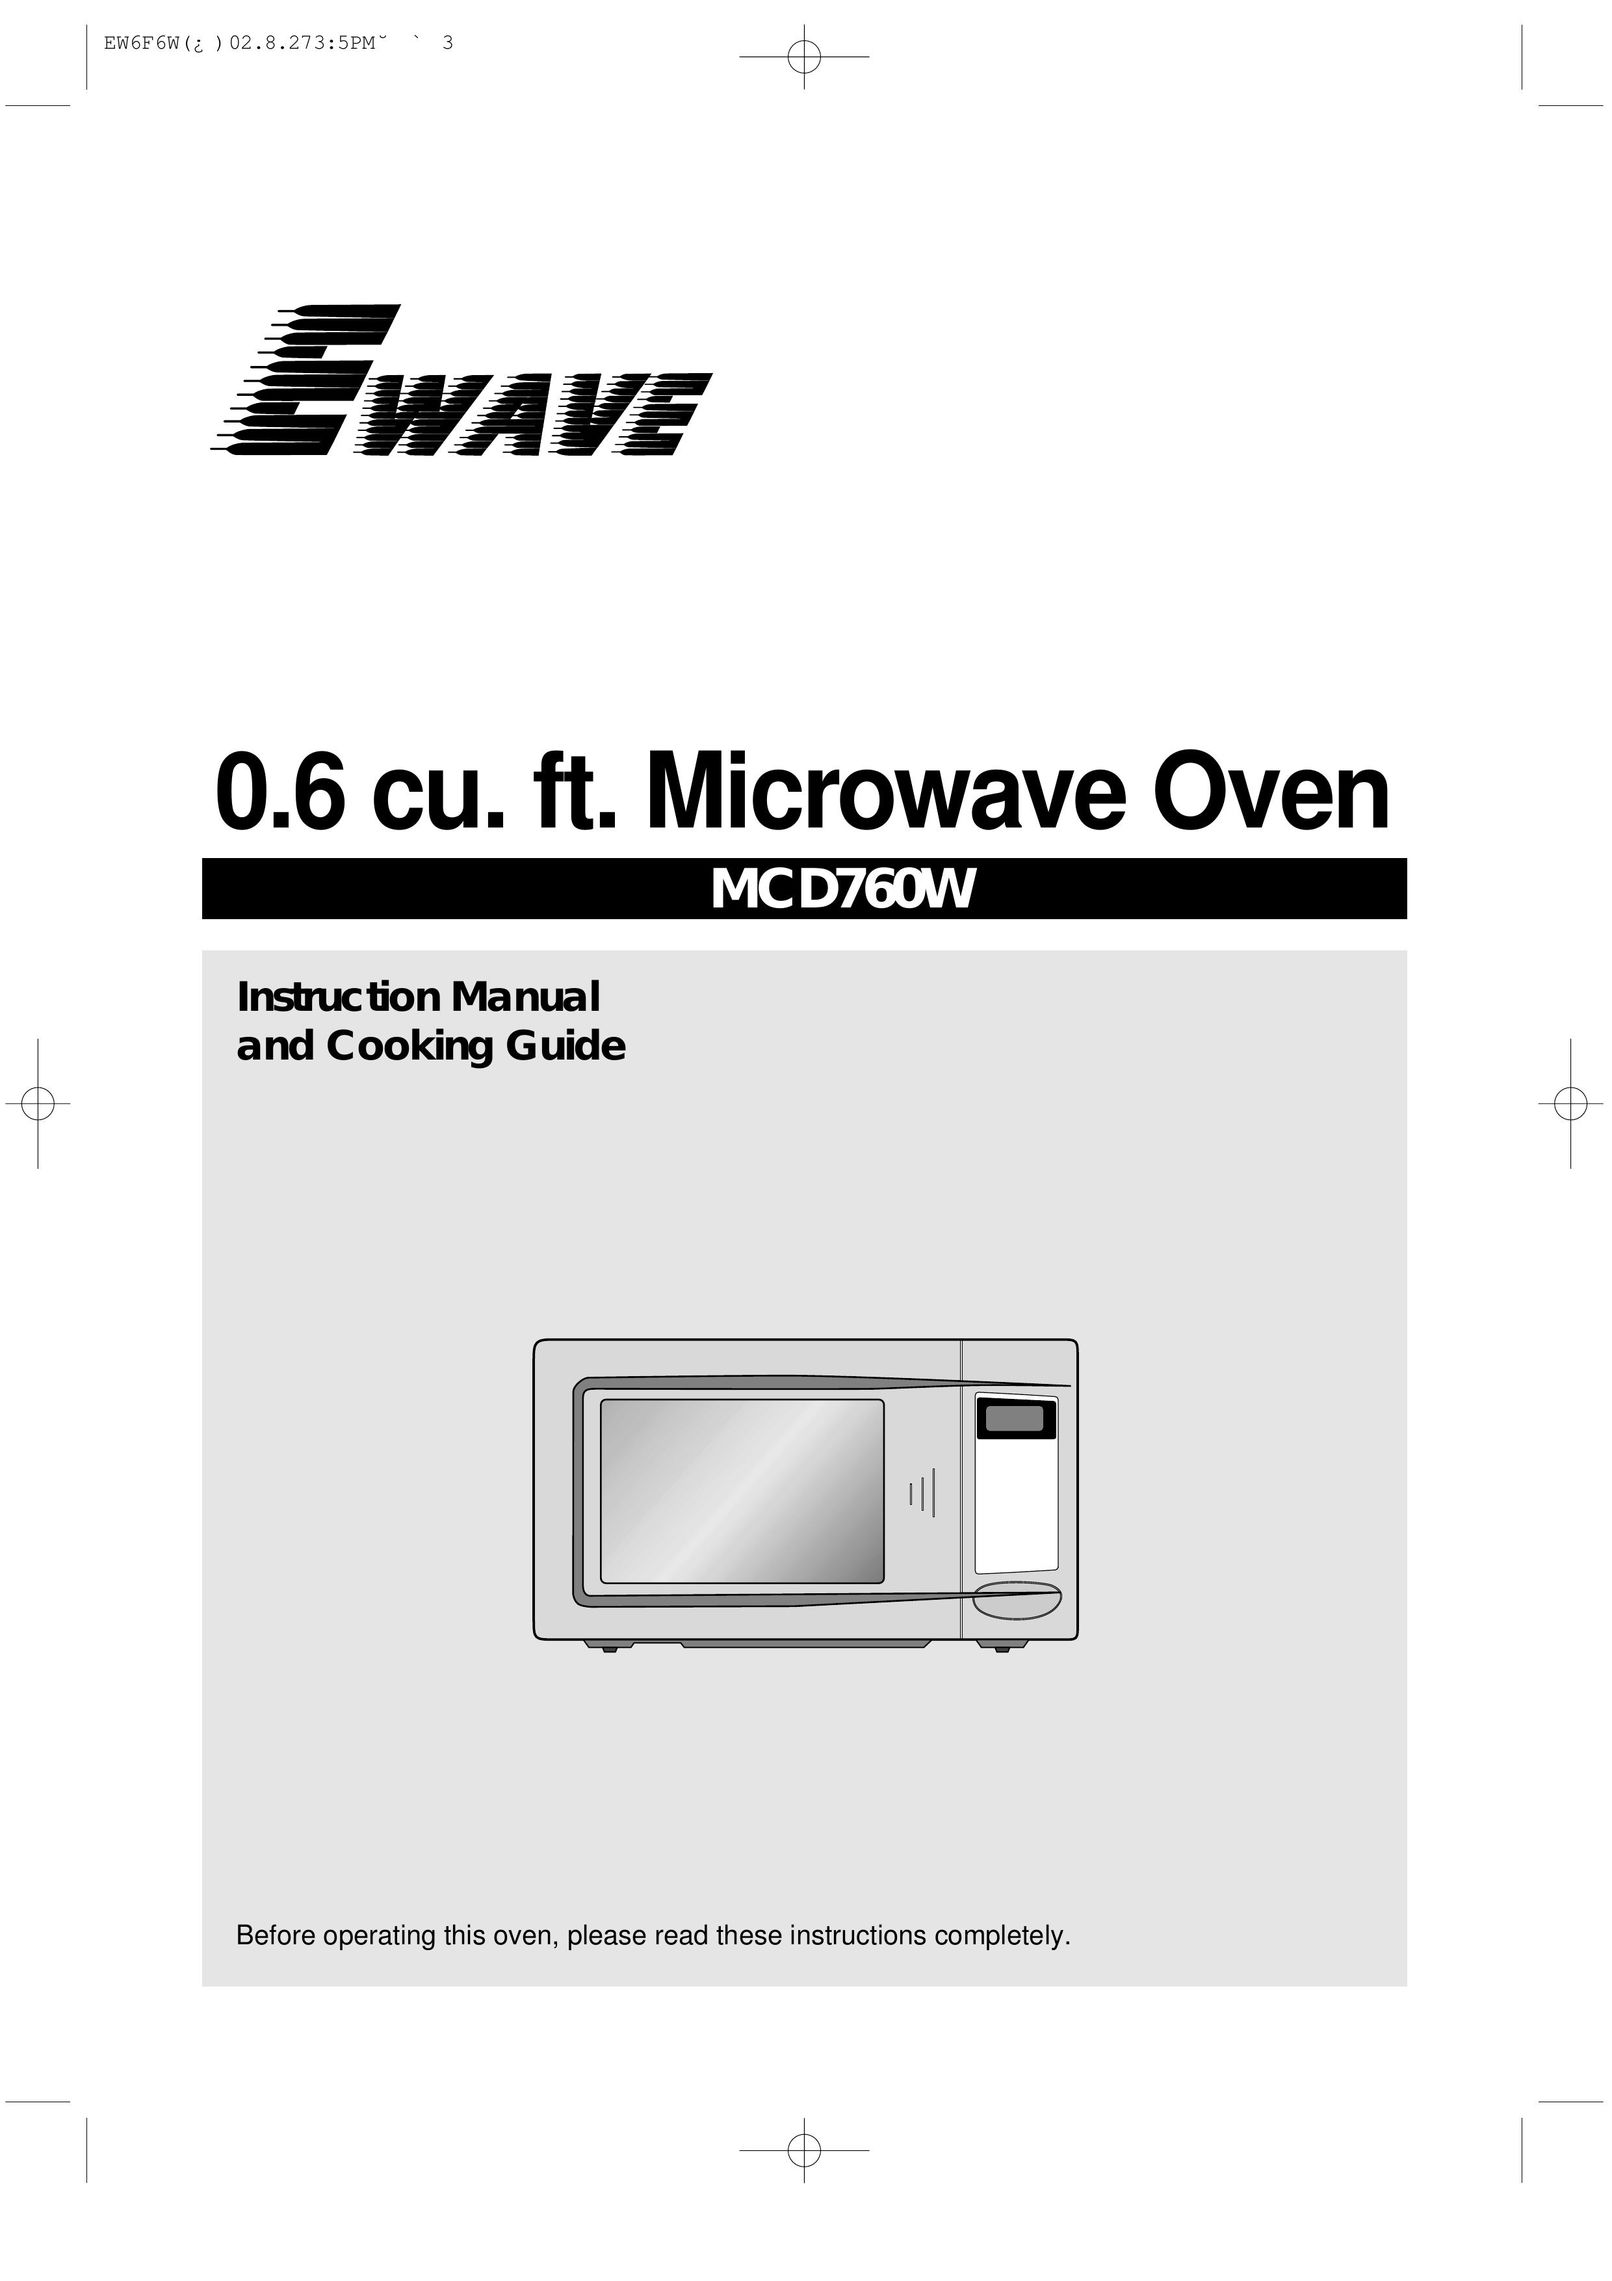 Magic Chef MCD760W Microwave Oven User Manual